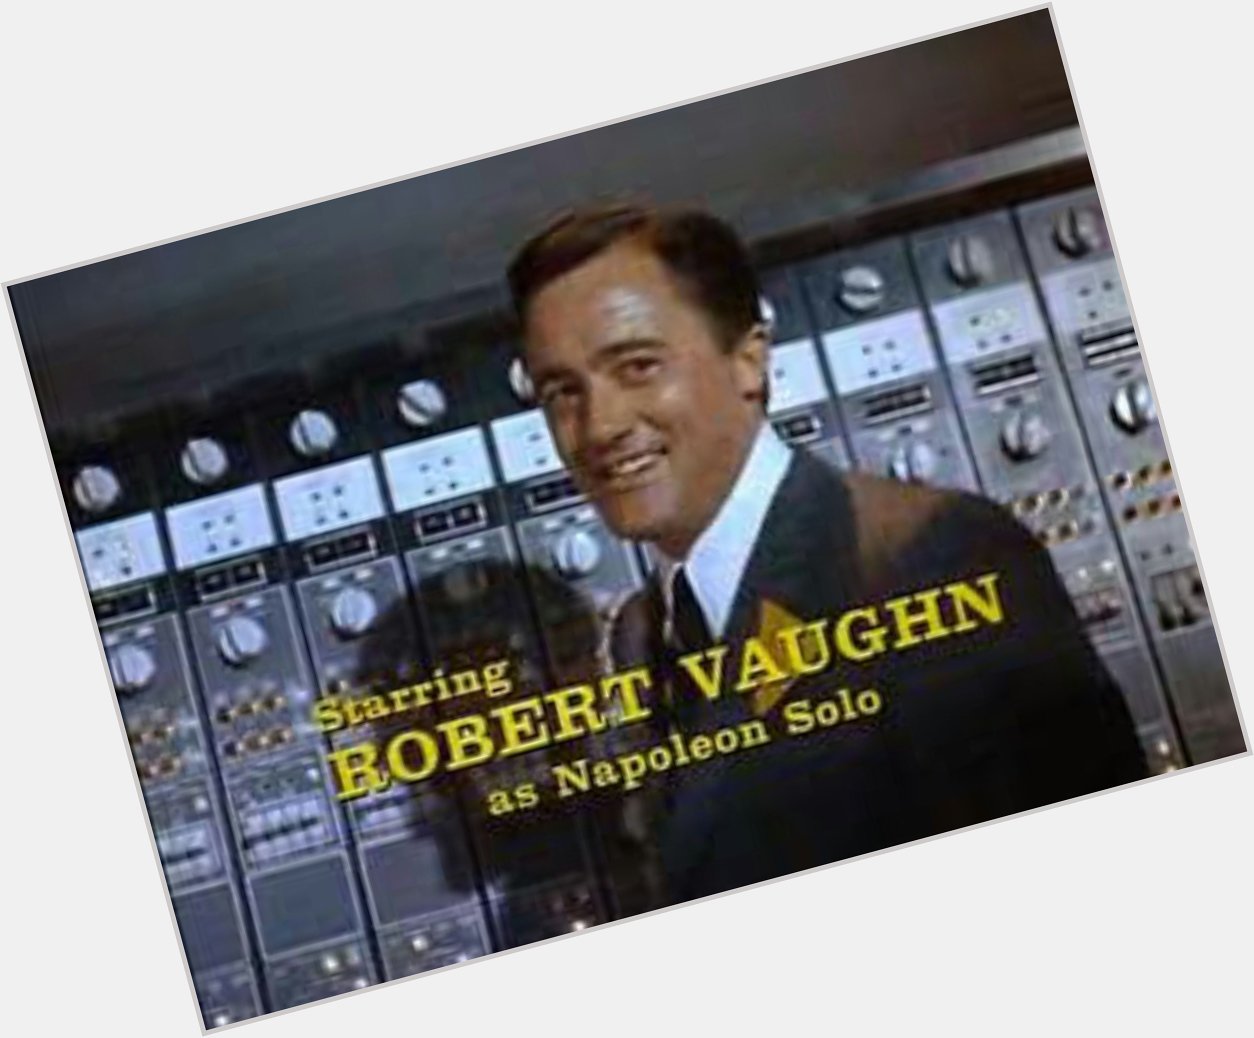 Happy birthday,Robert Vaughn. 